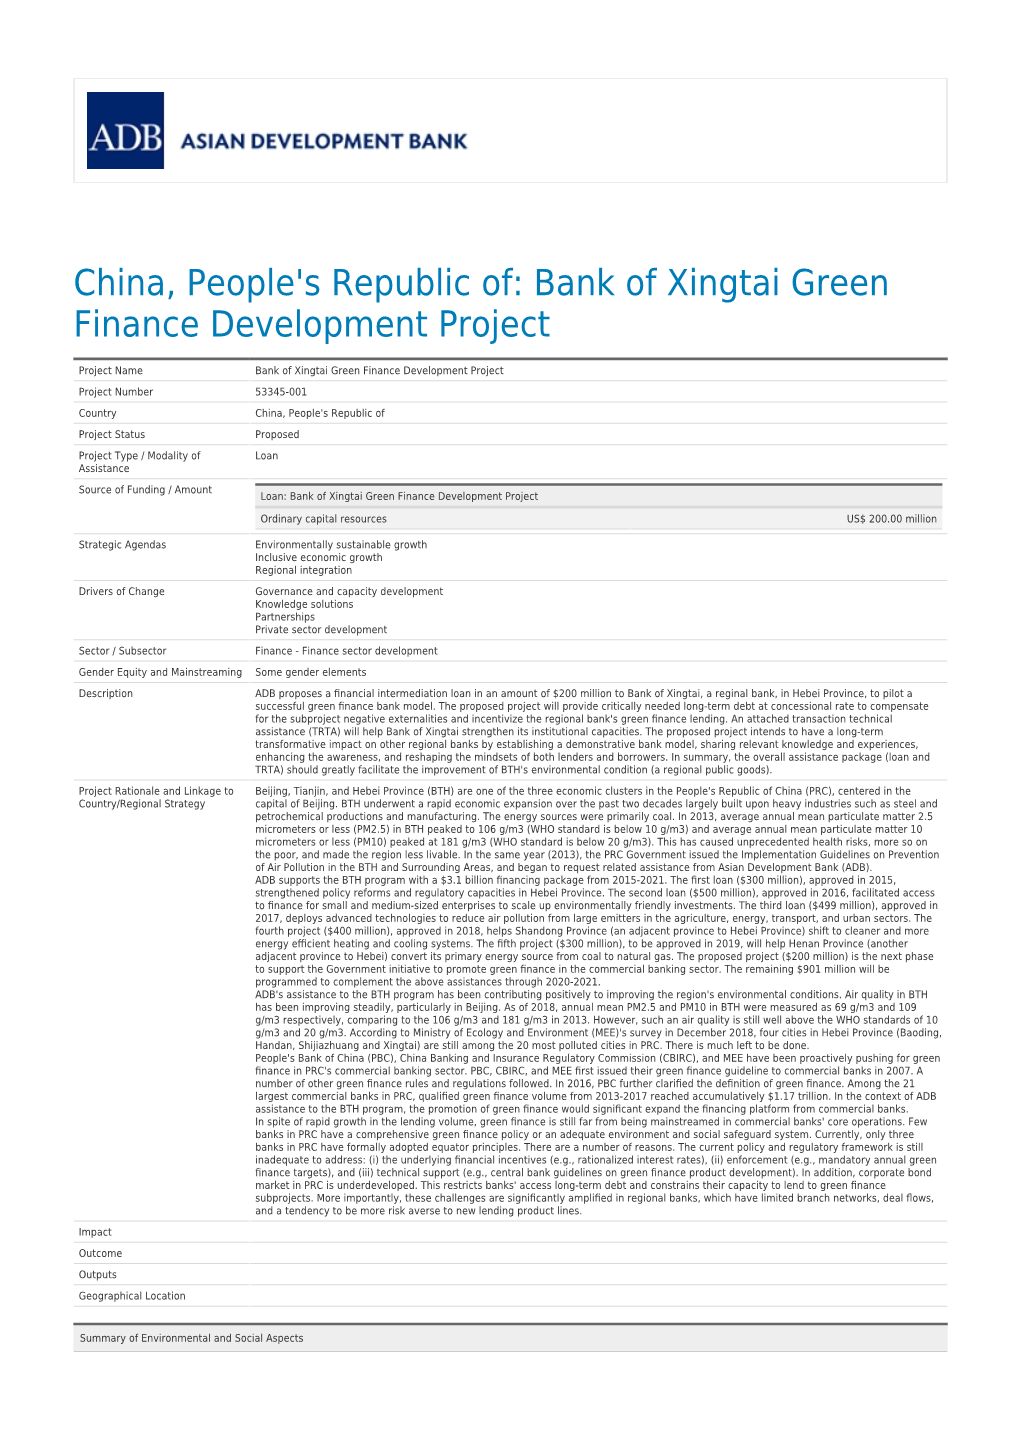 Bank of Xingtai Green Finance Development Project